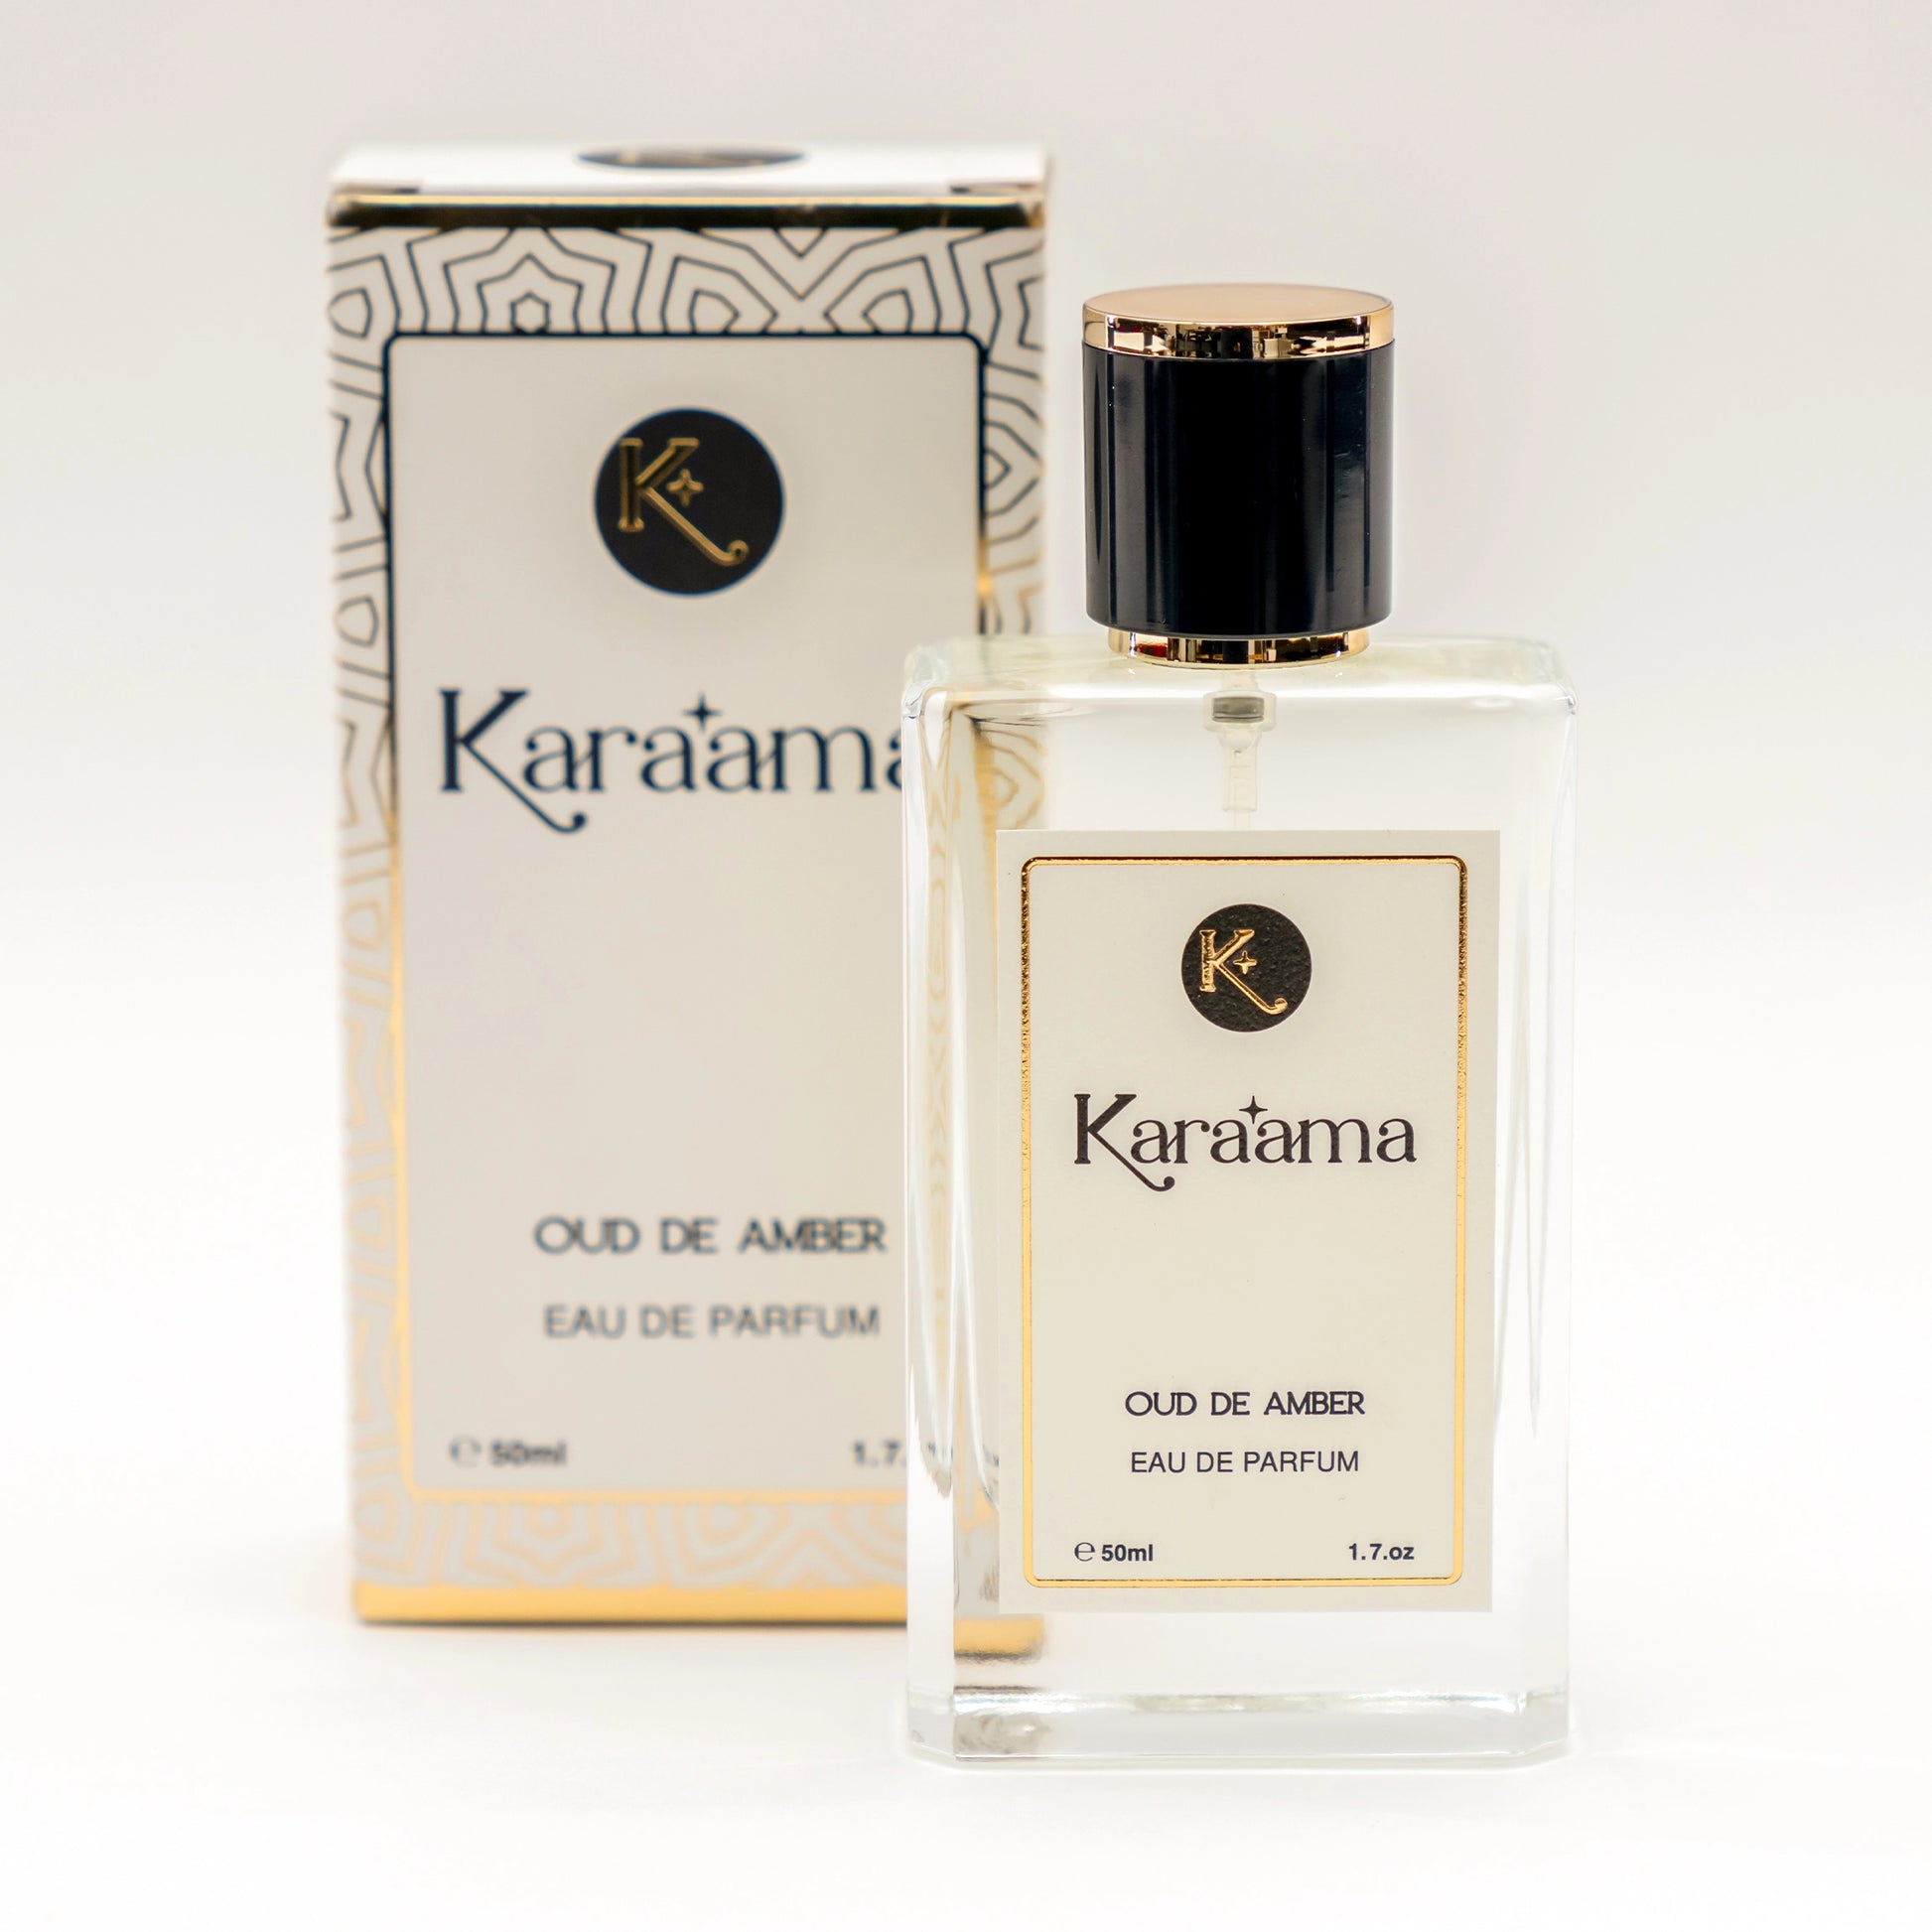 A bottle of Karaama Oud de Amber Eau de Parfum with a gold lid on a white table. The bottle is 50ml or 1.69 fl oz. [karaama.com]